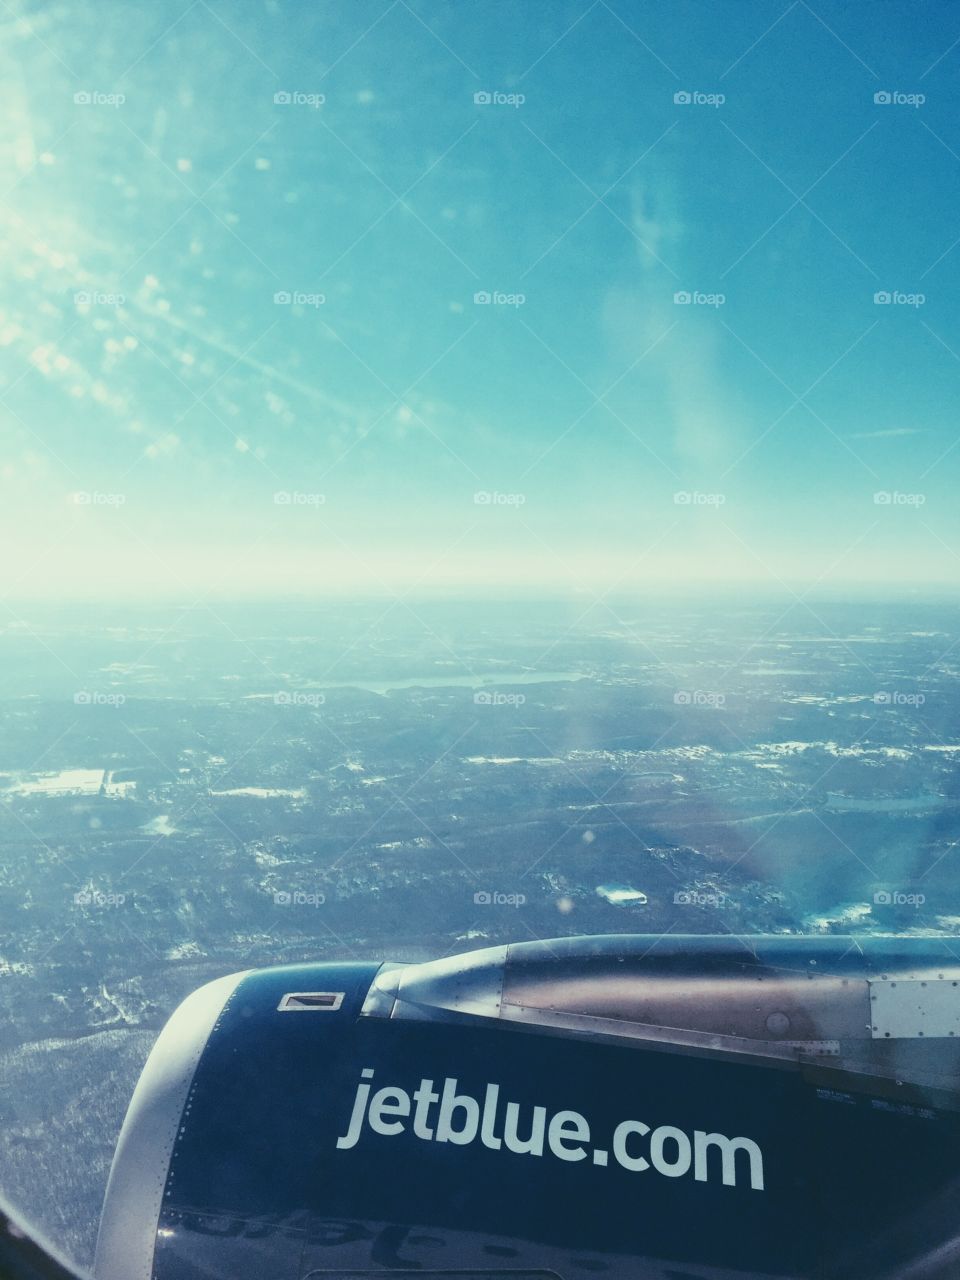 Jetblue flight